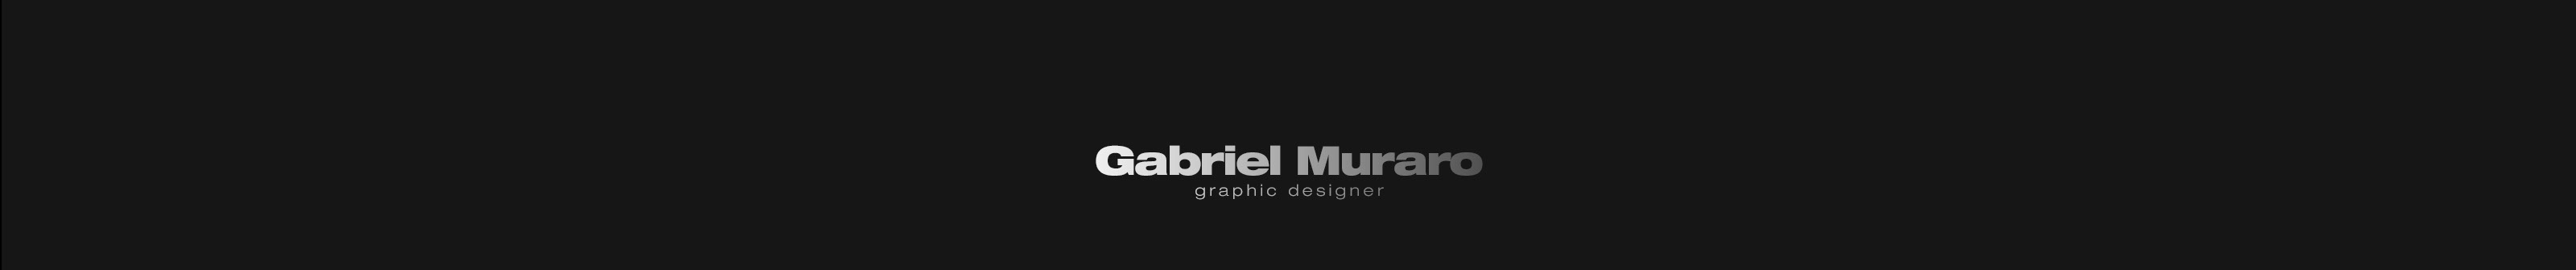 Banner de perfil de Gabriel Muraro